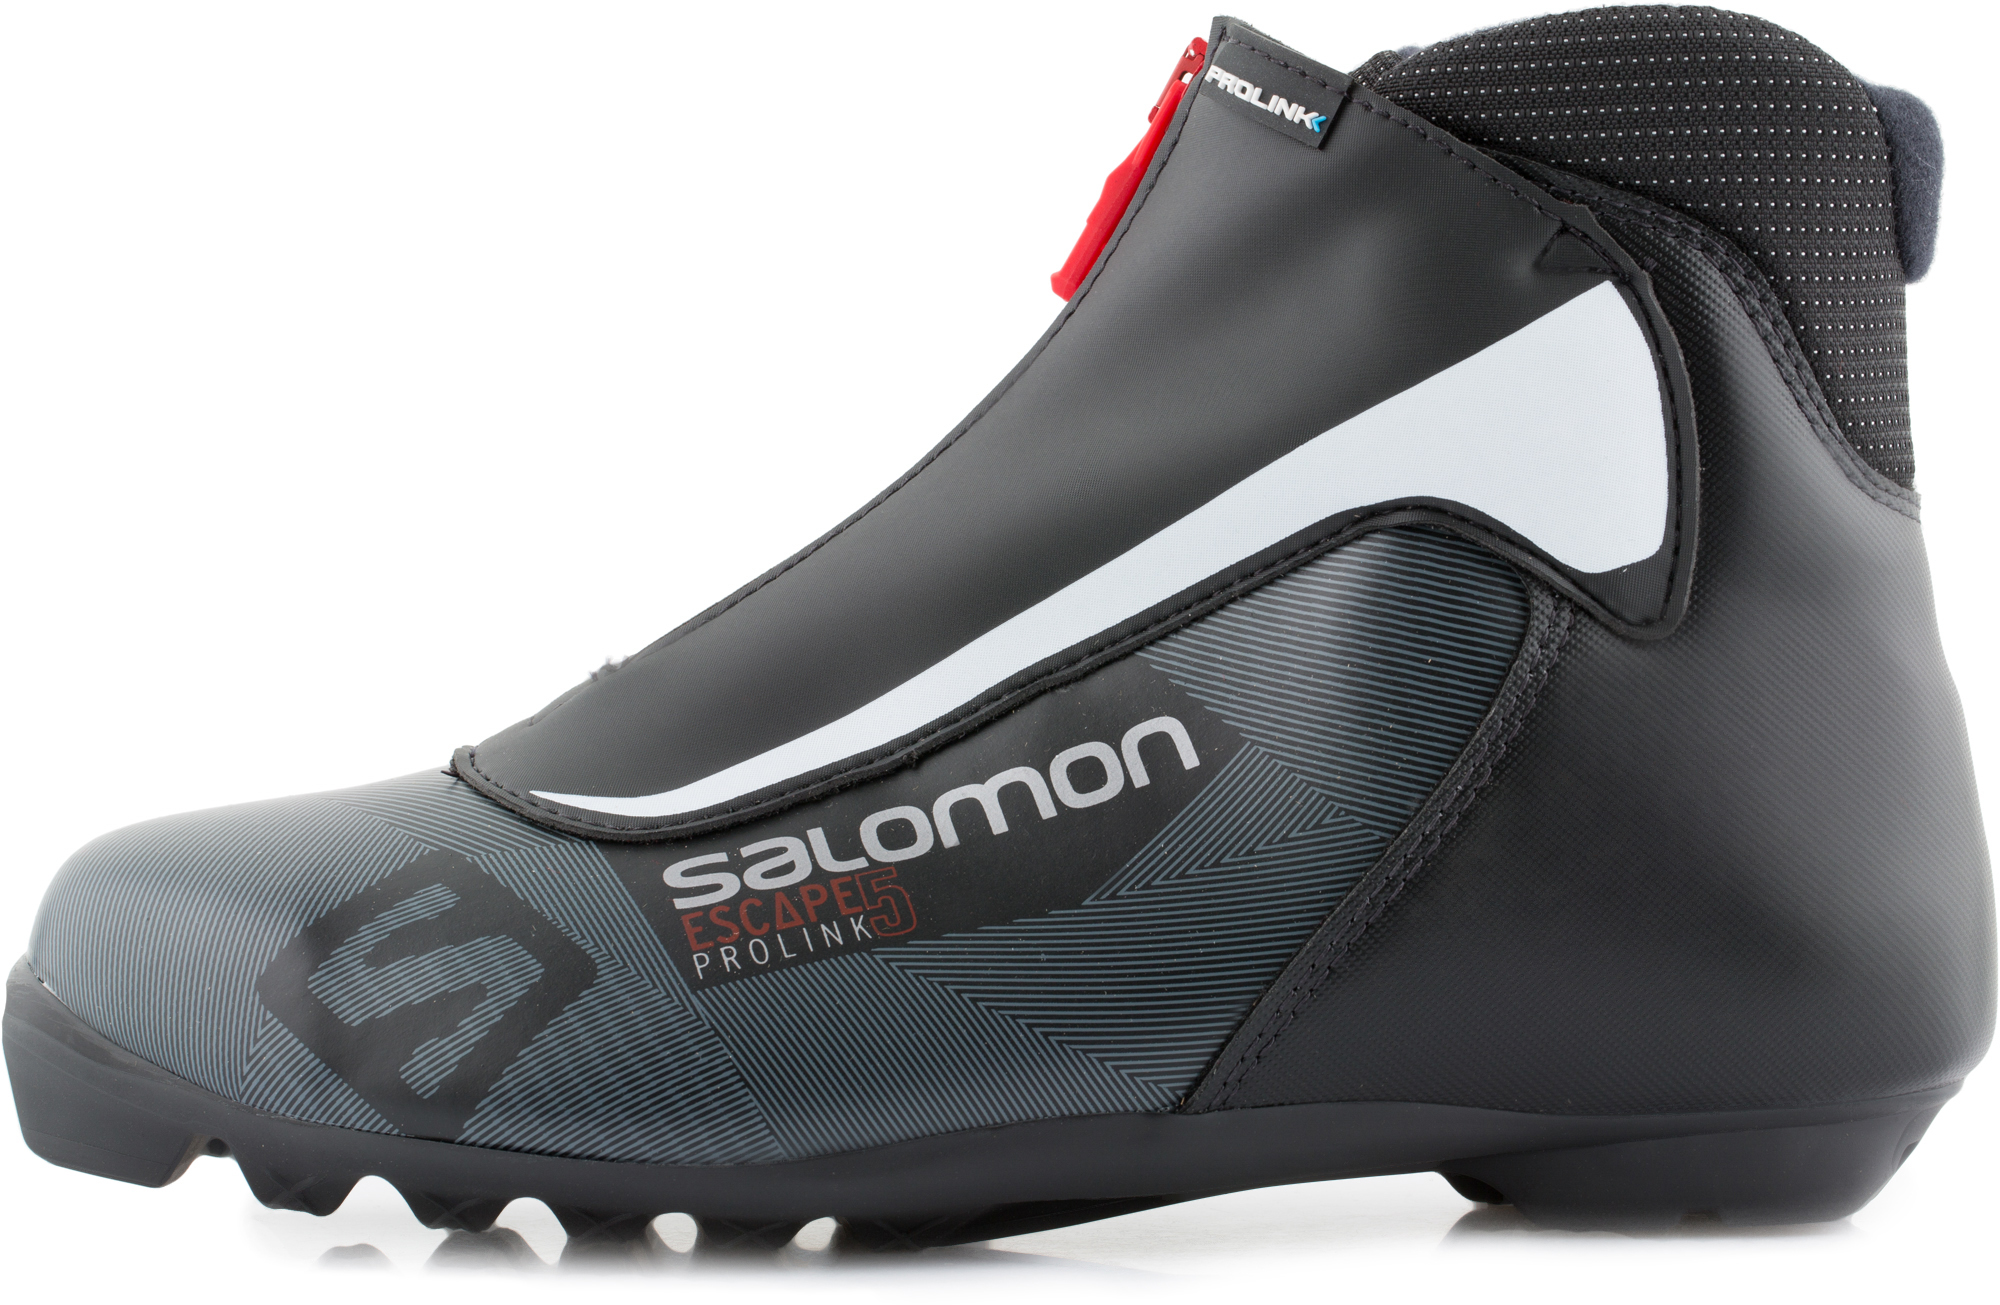 Salomon Ботинки для беговых лыж Salomon Escape 5 Prolink